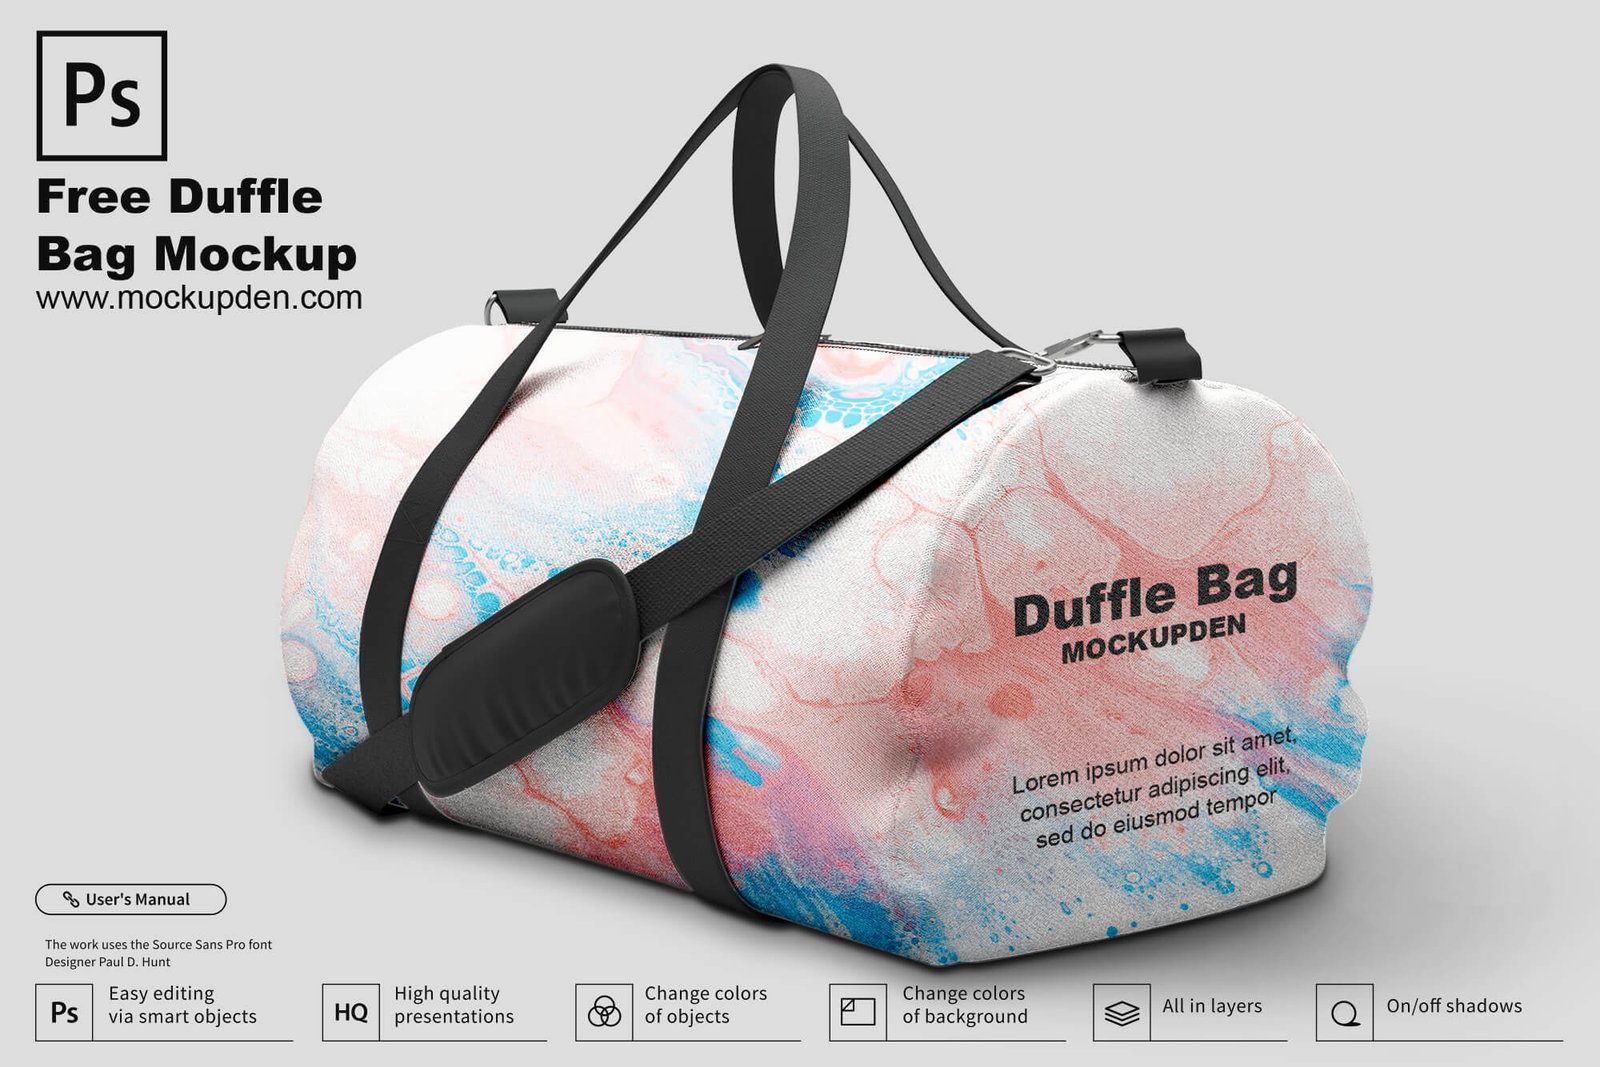 Free Duffle Bag Mockup PSD Template Mockup Den